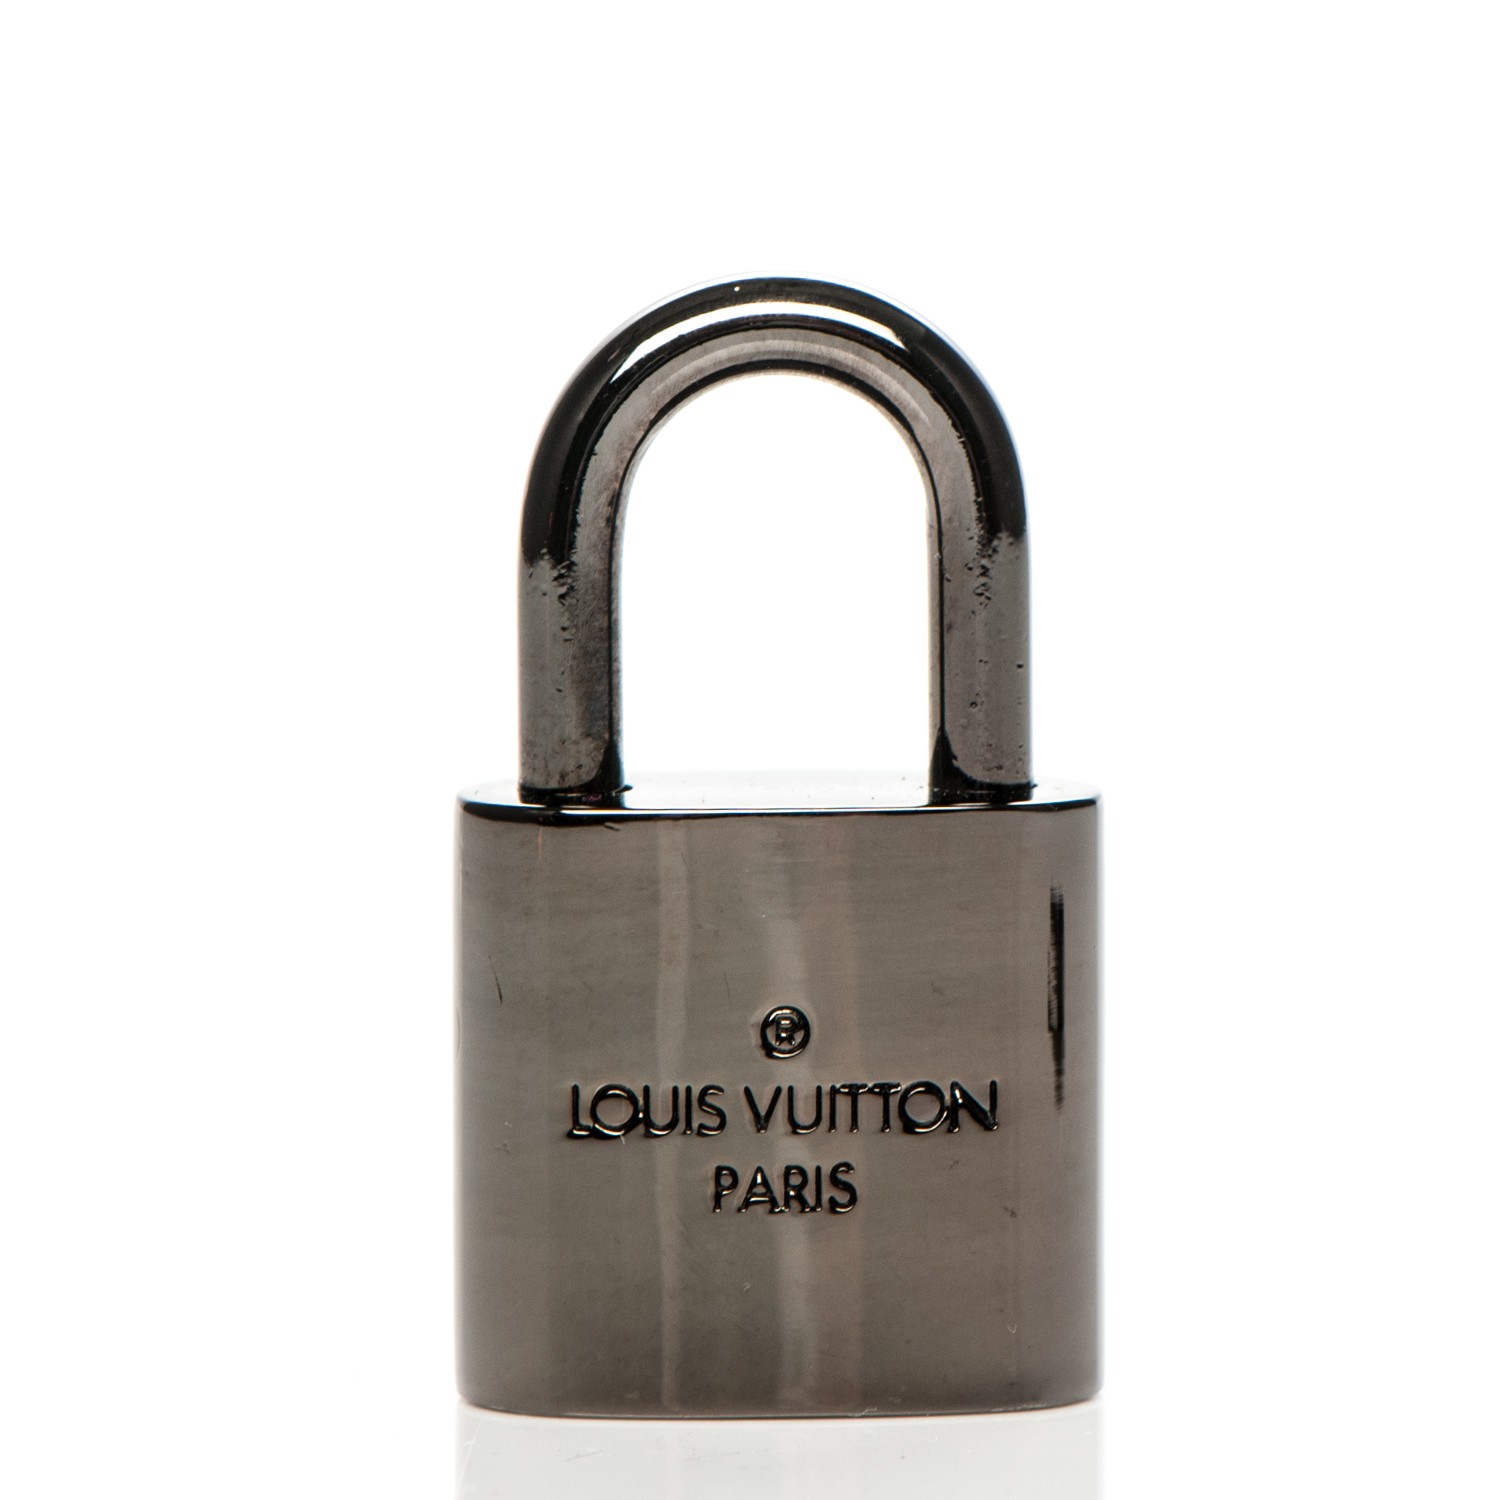 LOUIS VUITTON Lock and Key Set 307 184266